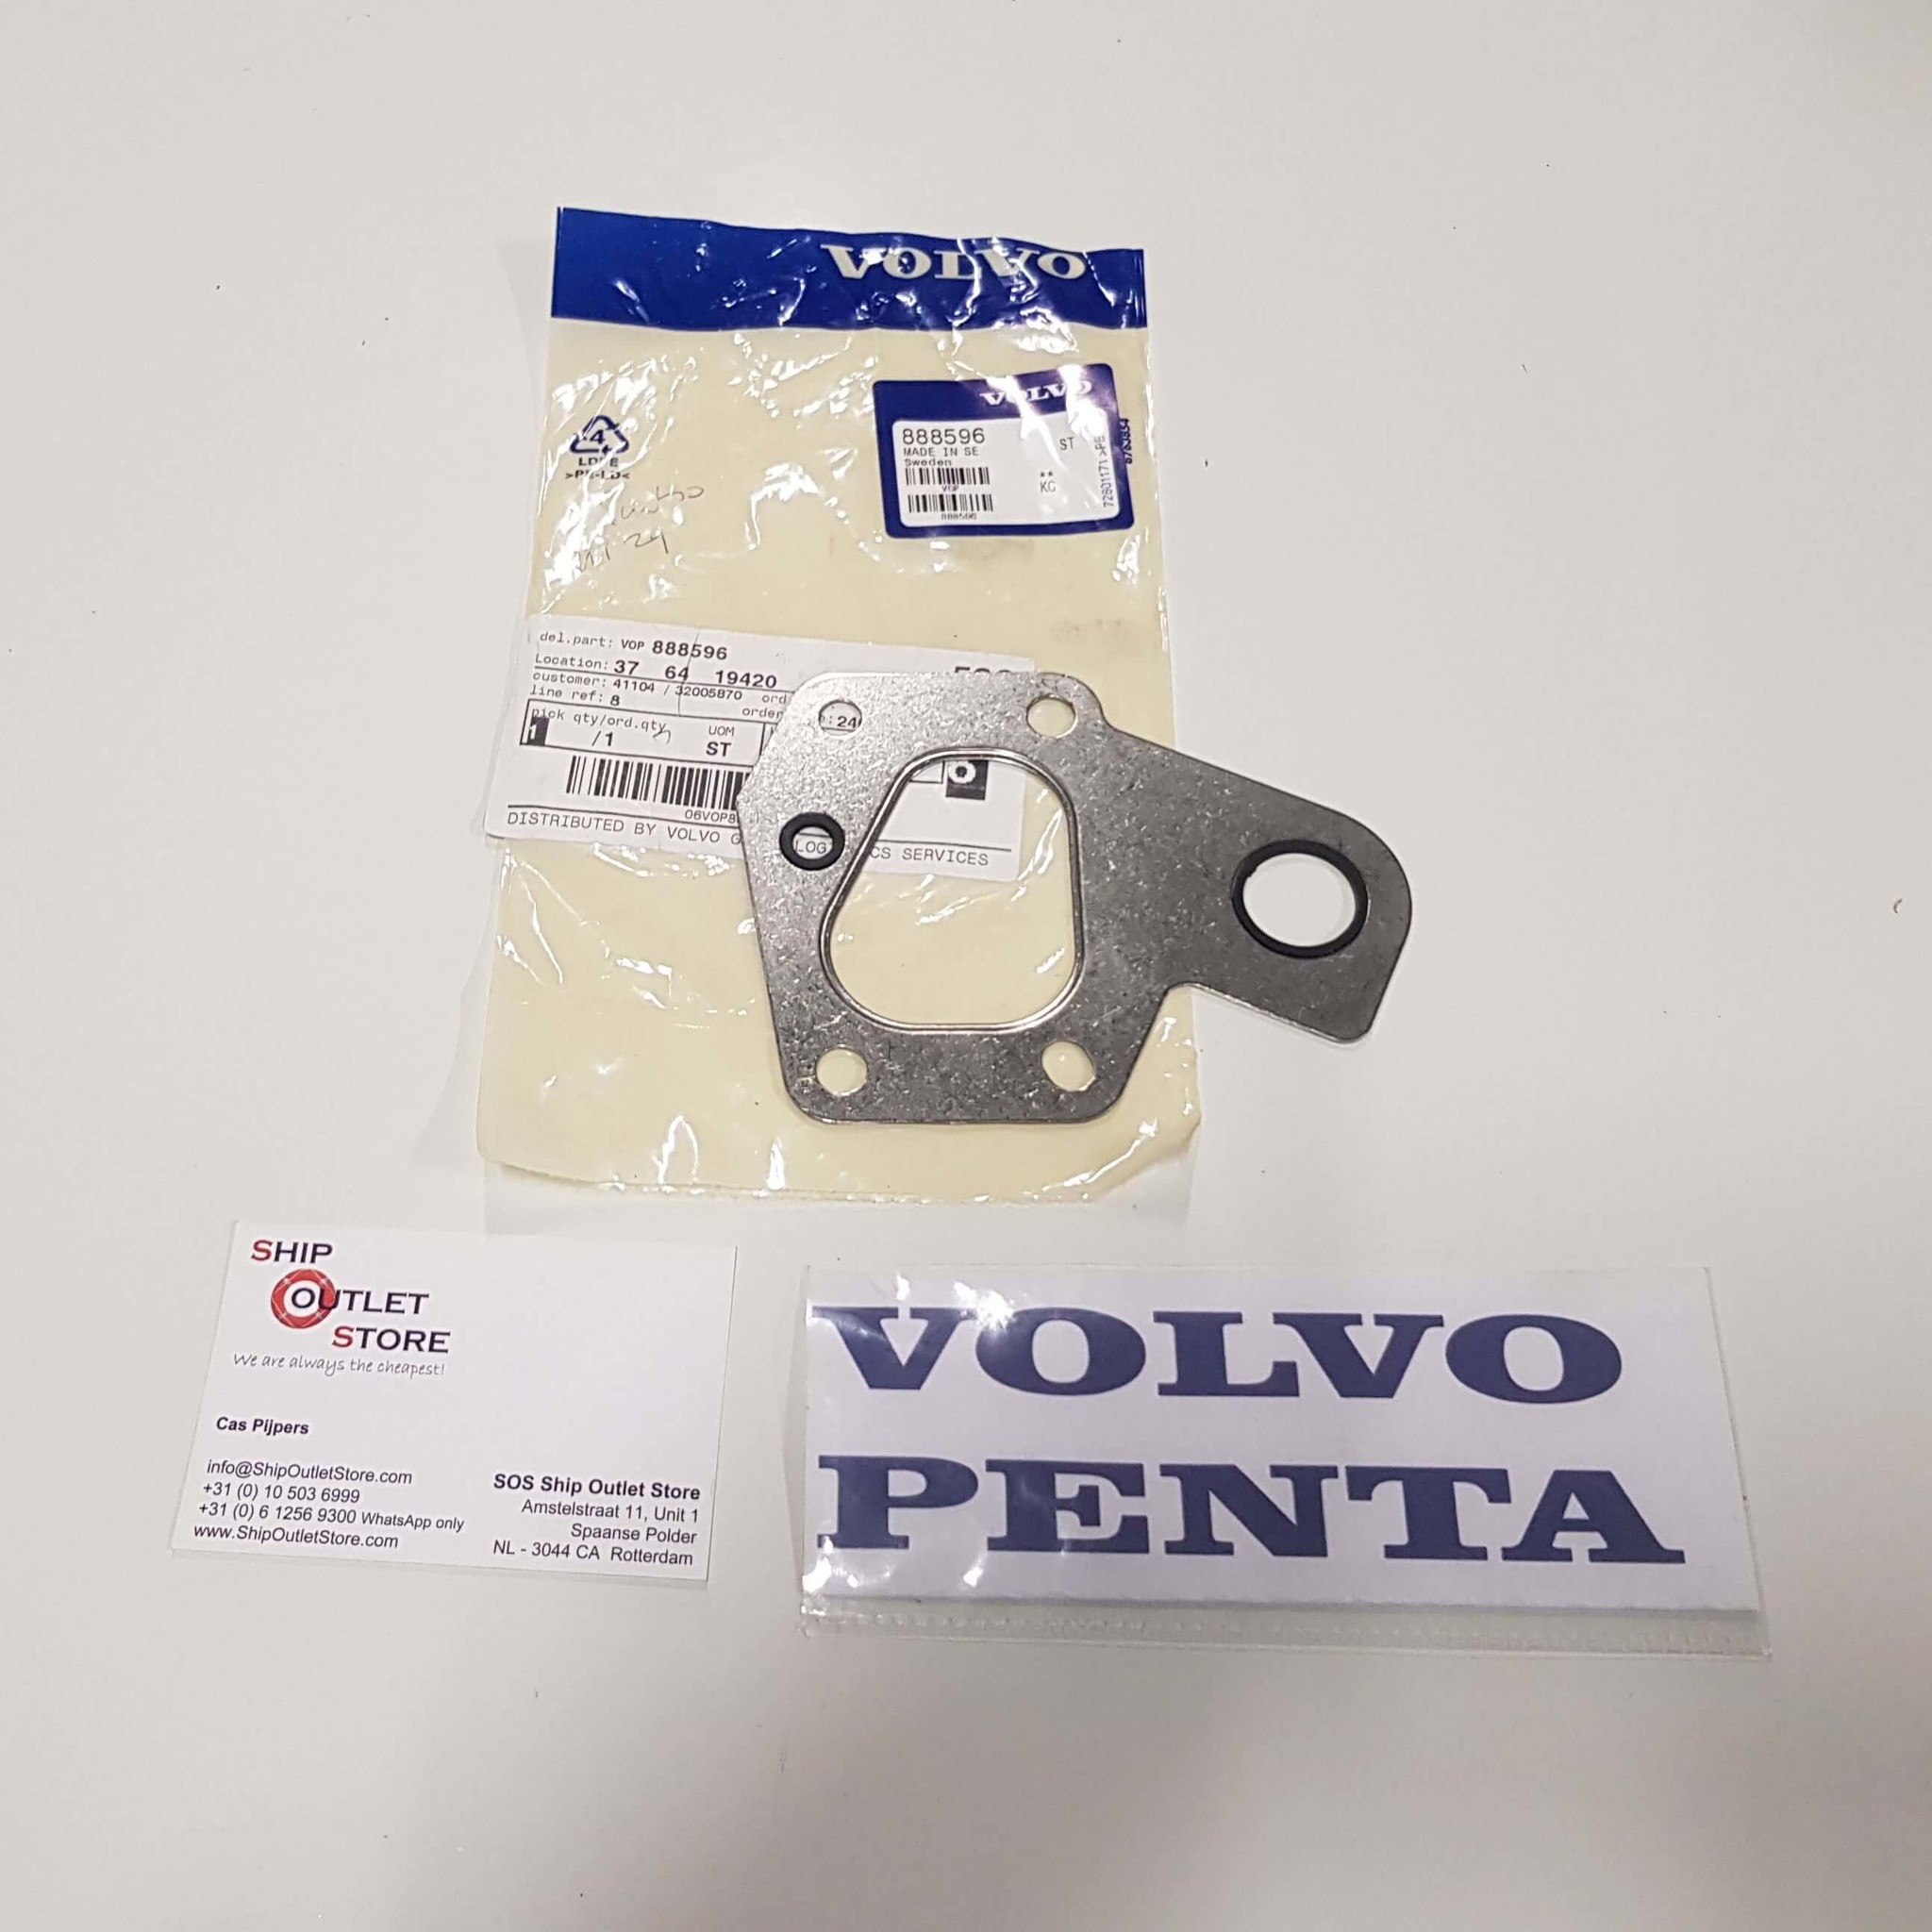 Exhaust gasket Volvo Penta 888596